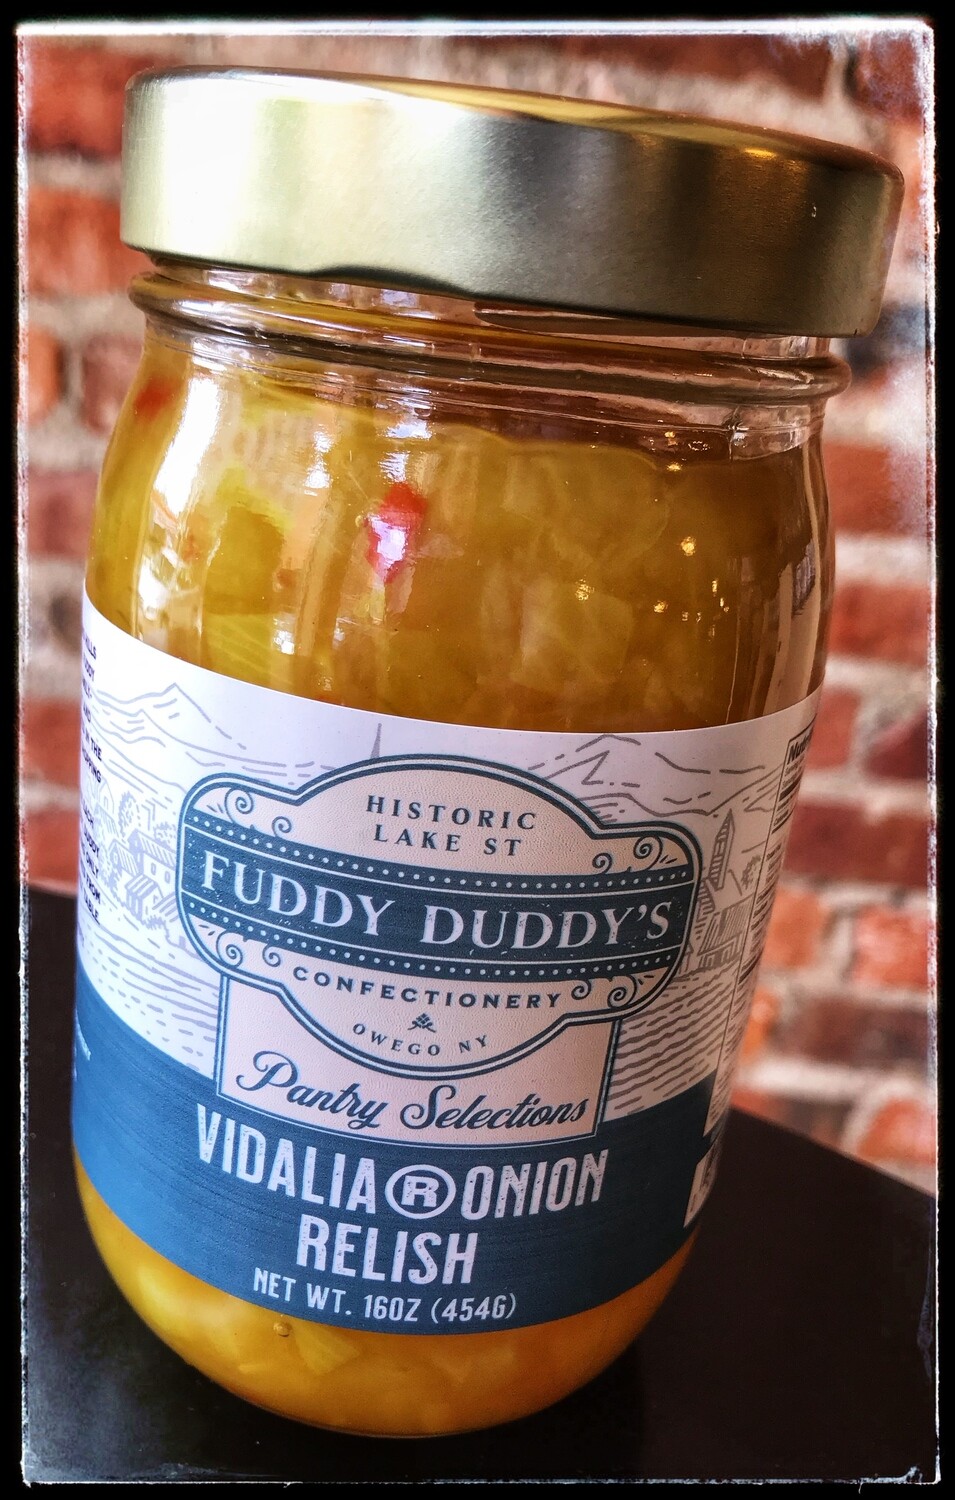 Fuddy Duddy's Vidalia Onion Relish